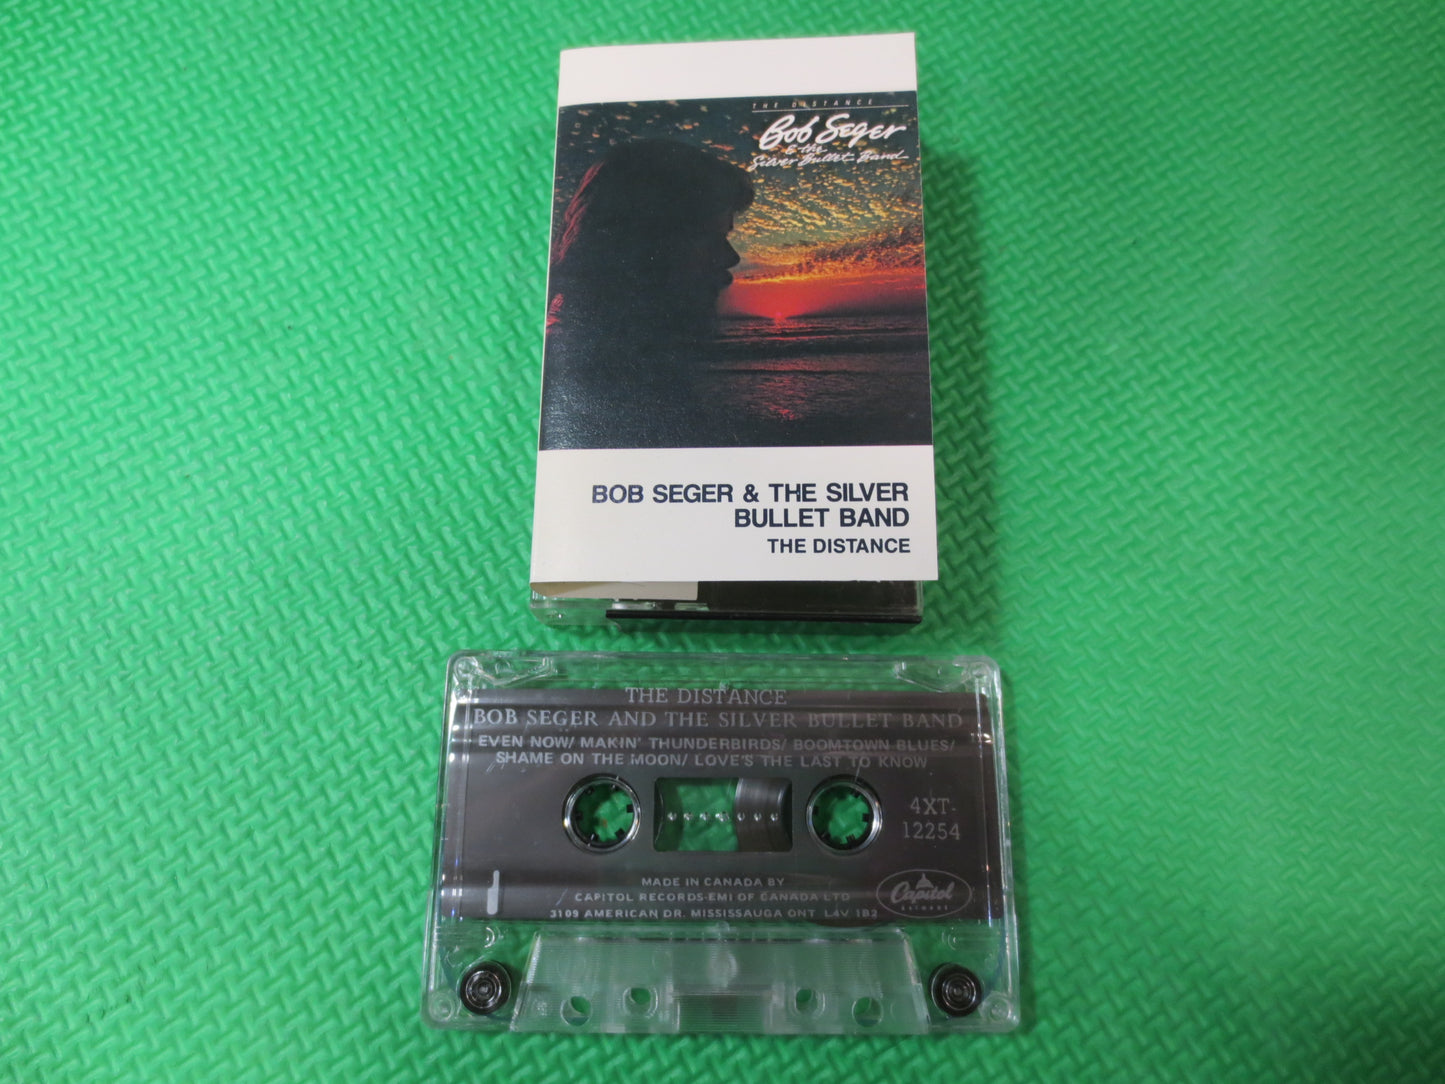 BOB SEGER Tape, The DISTANCE Tape, Bob Seger Album, Bob Seger Music, Bob Seger Lp, Tape Cassette, Cassette, 1988 Cassette